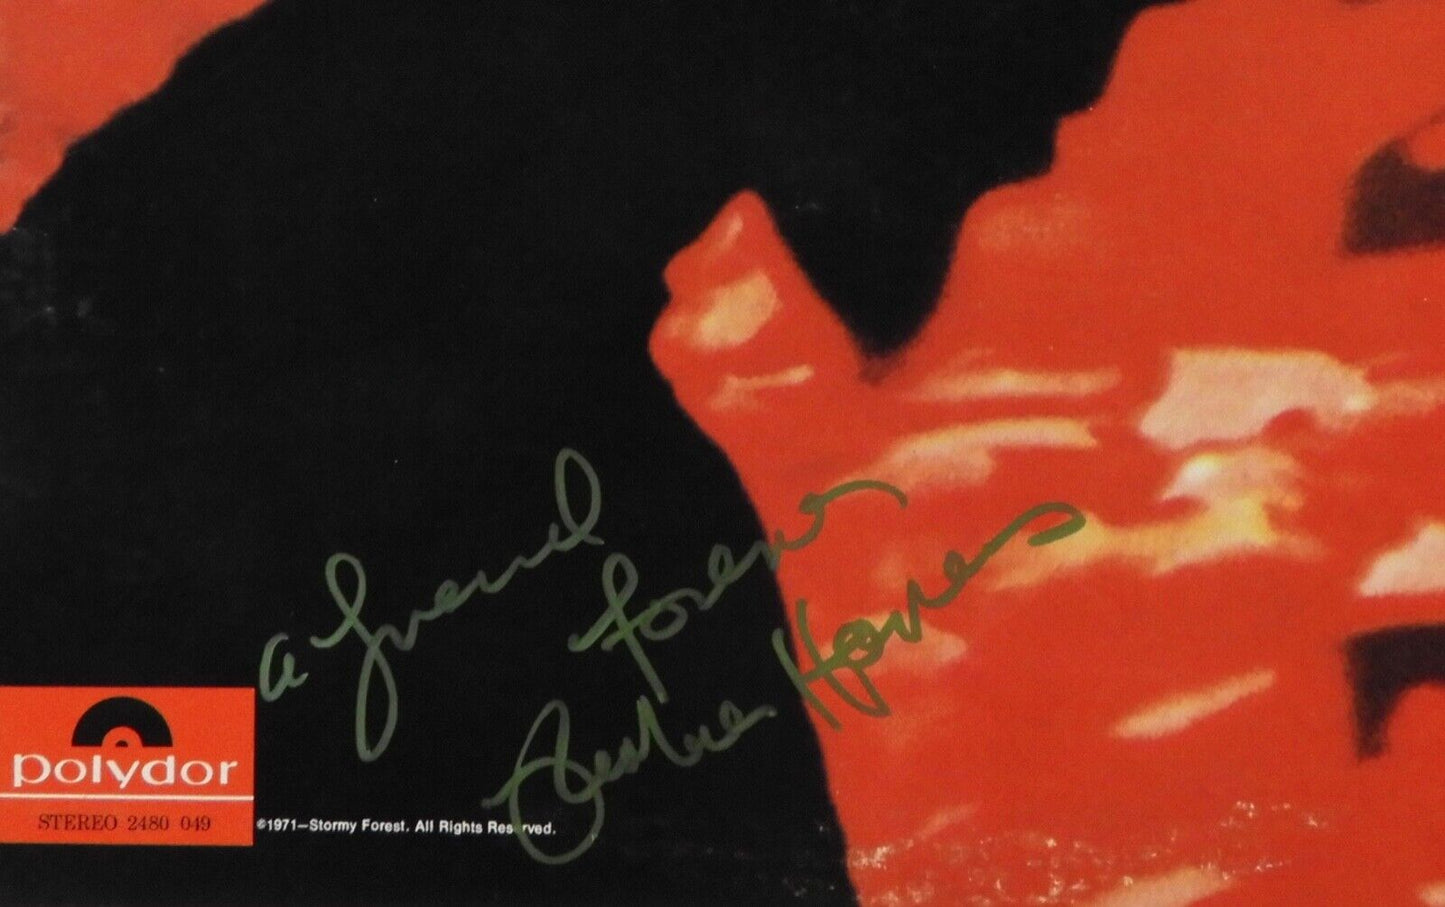 Richie Havens JSA Signed Autograph Album Vinyl Record The Great Blind Degree